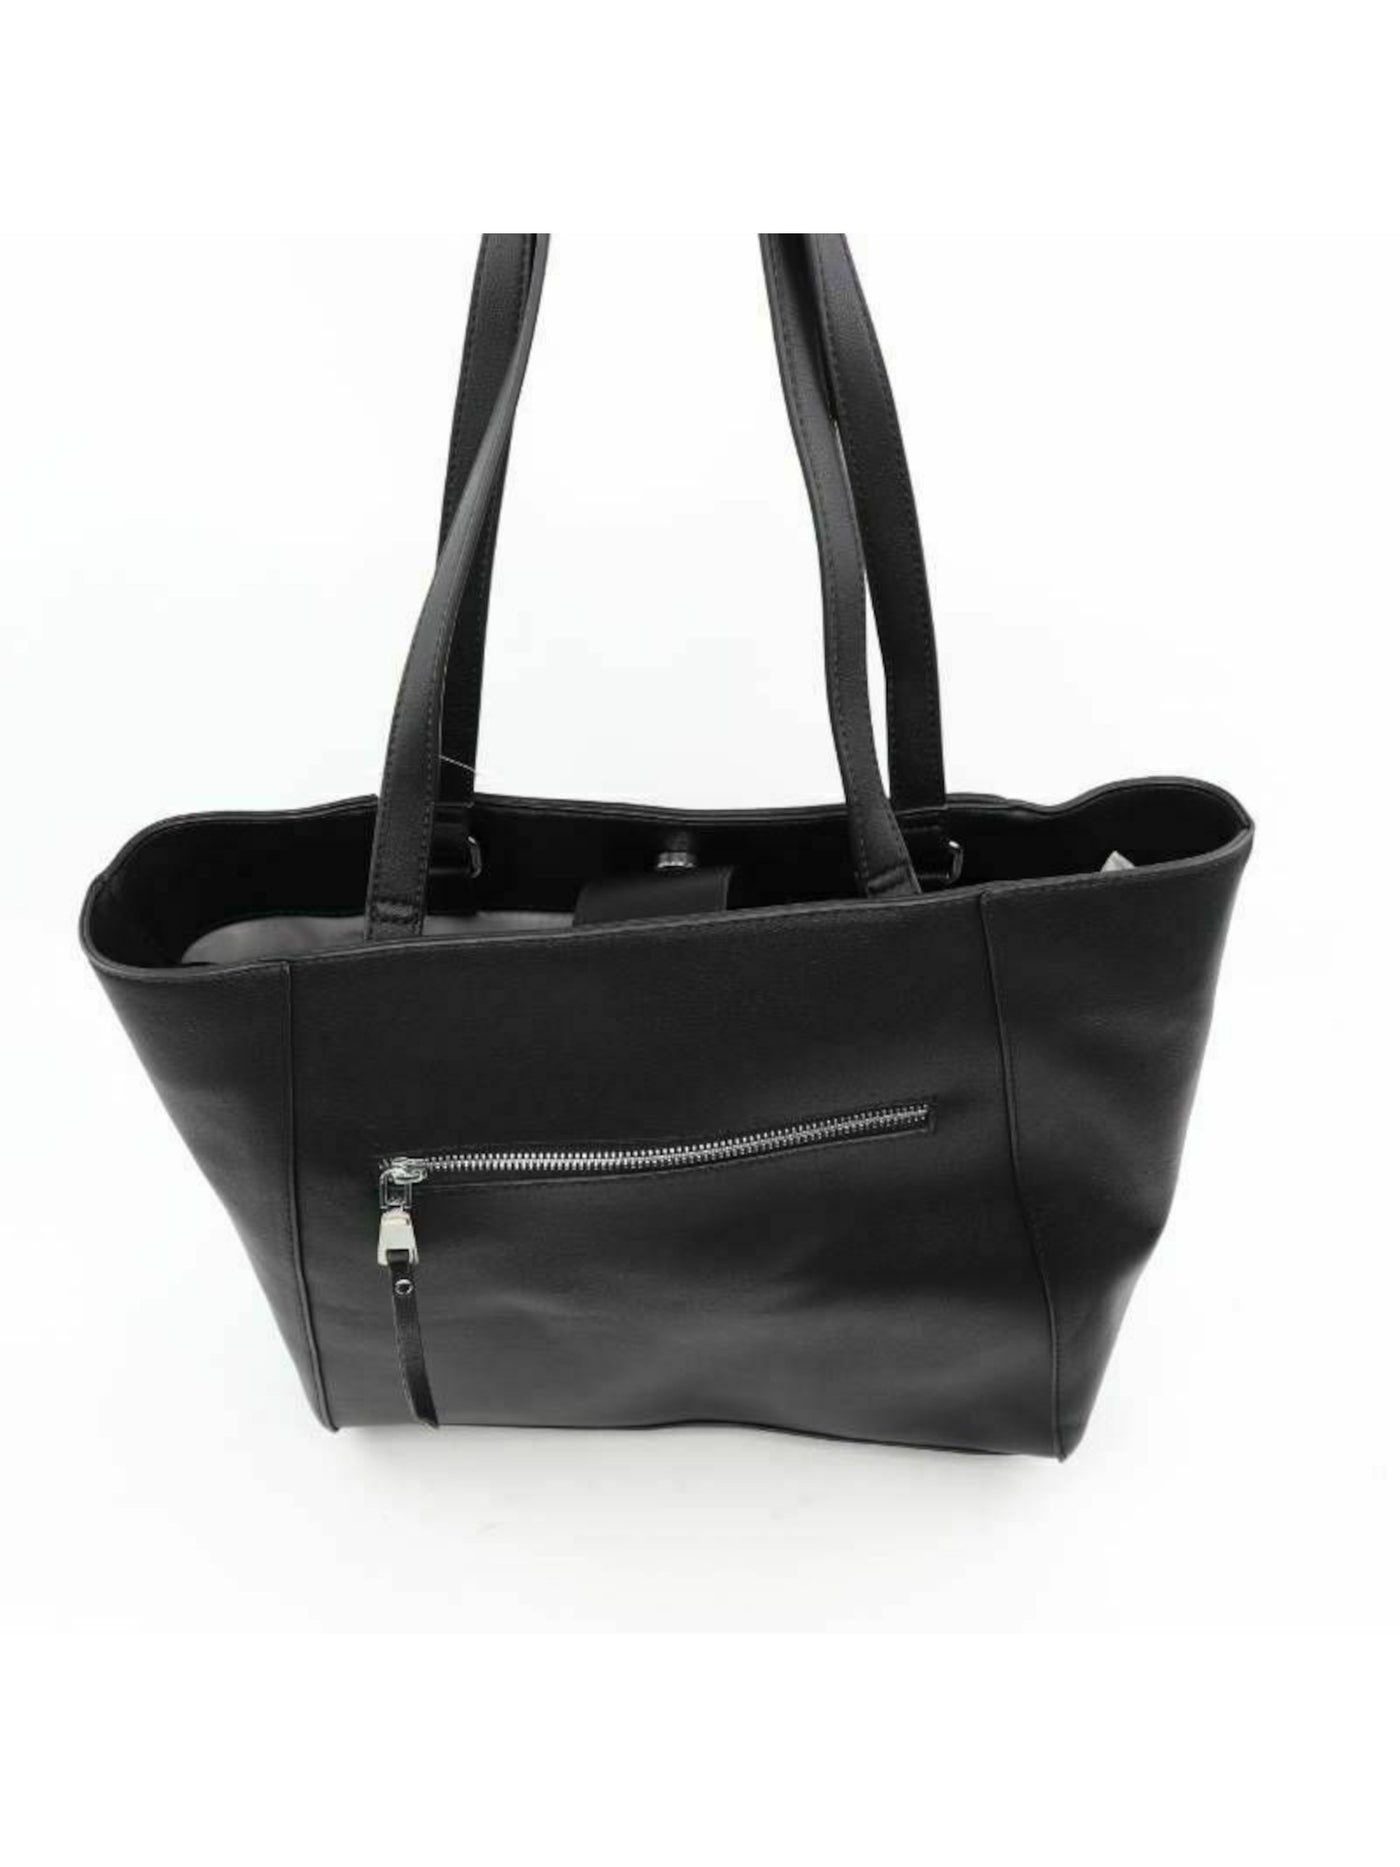 INC Women's Black Leather Woven Double Flat Strap Tote Handbag Purse